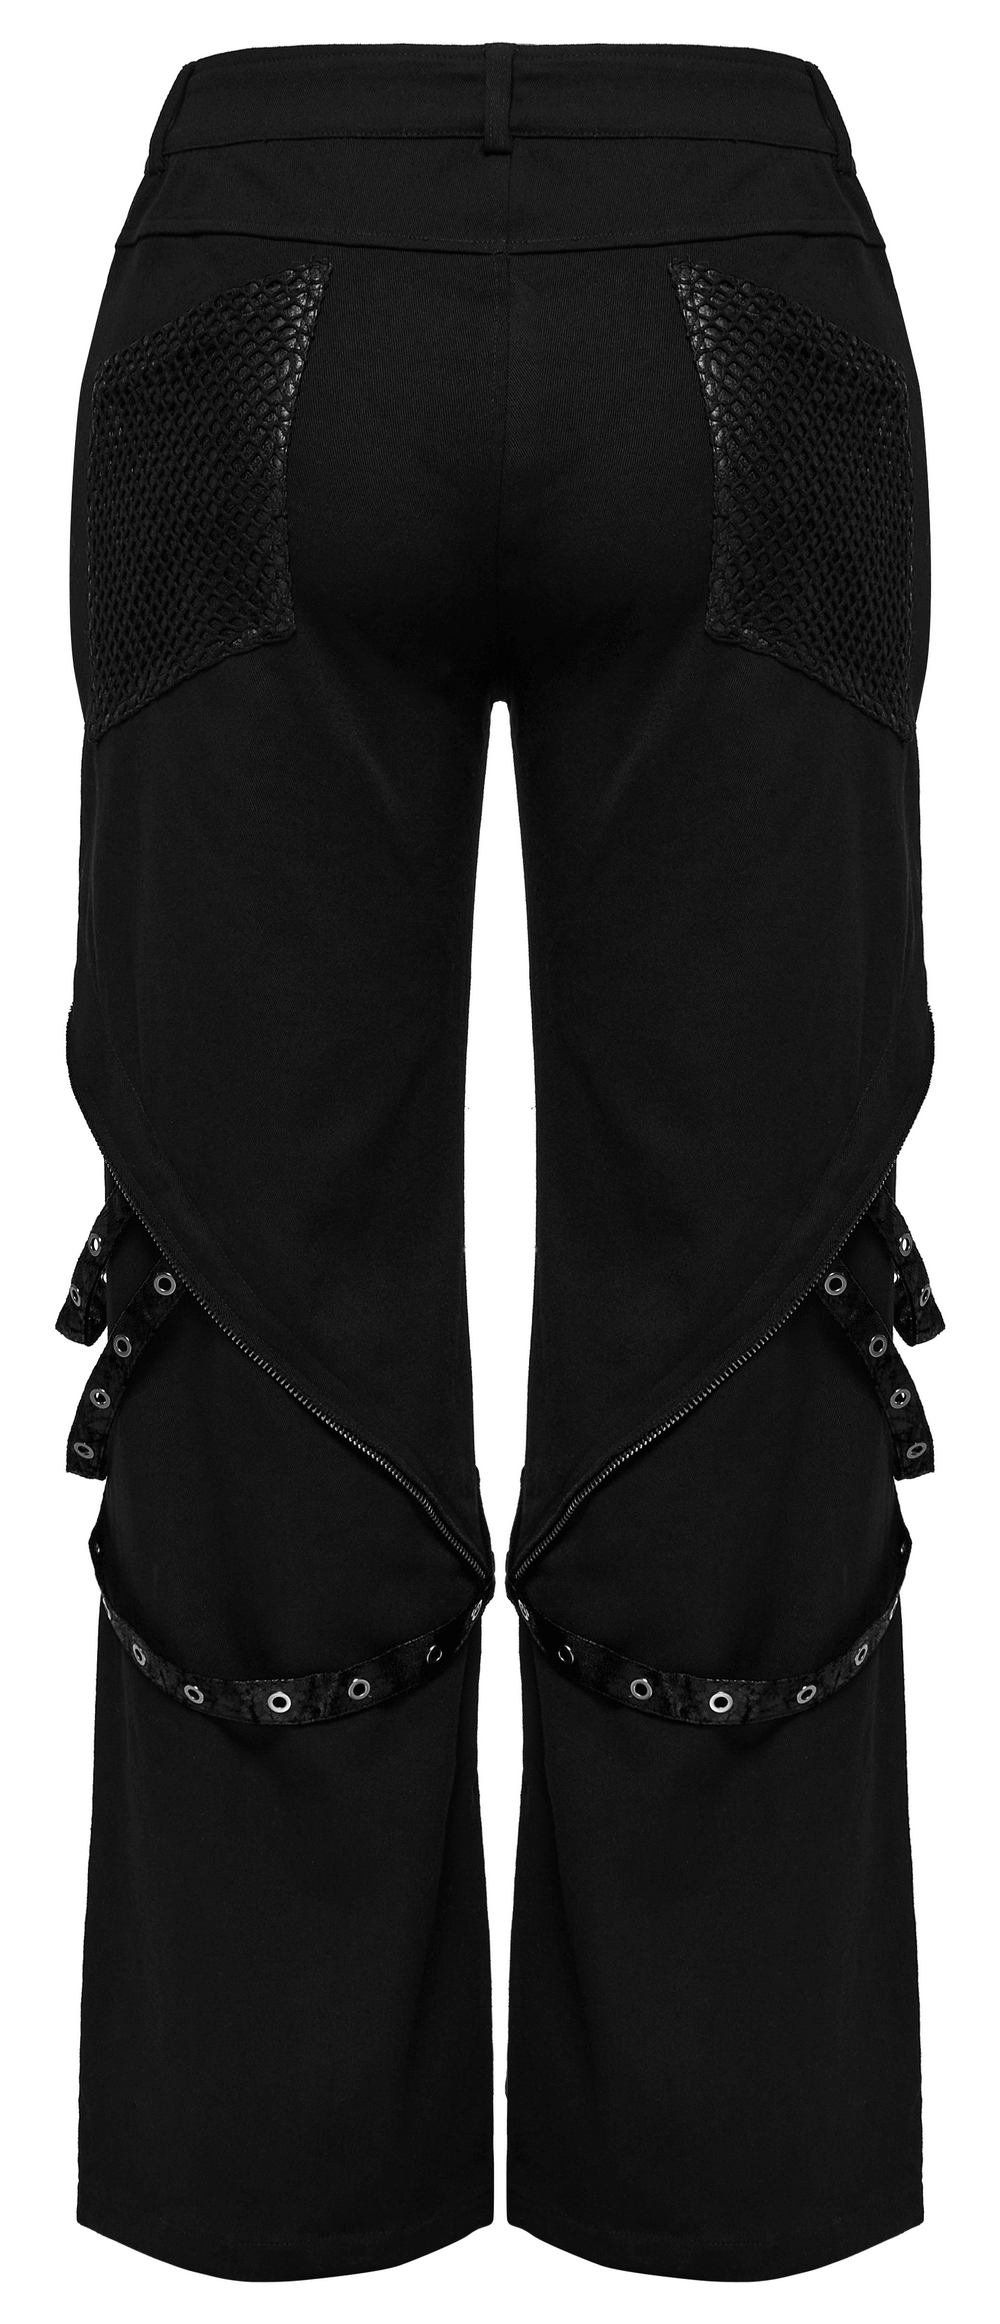 Pantalon large punk noir avec bretelles amovibles